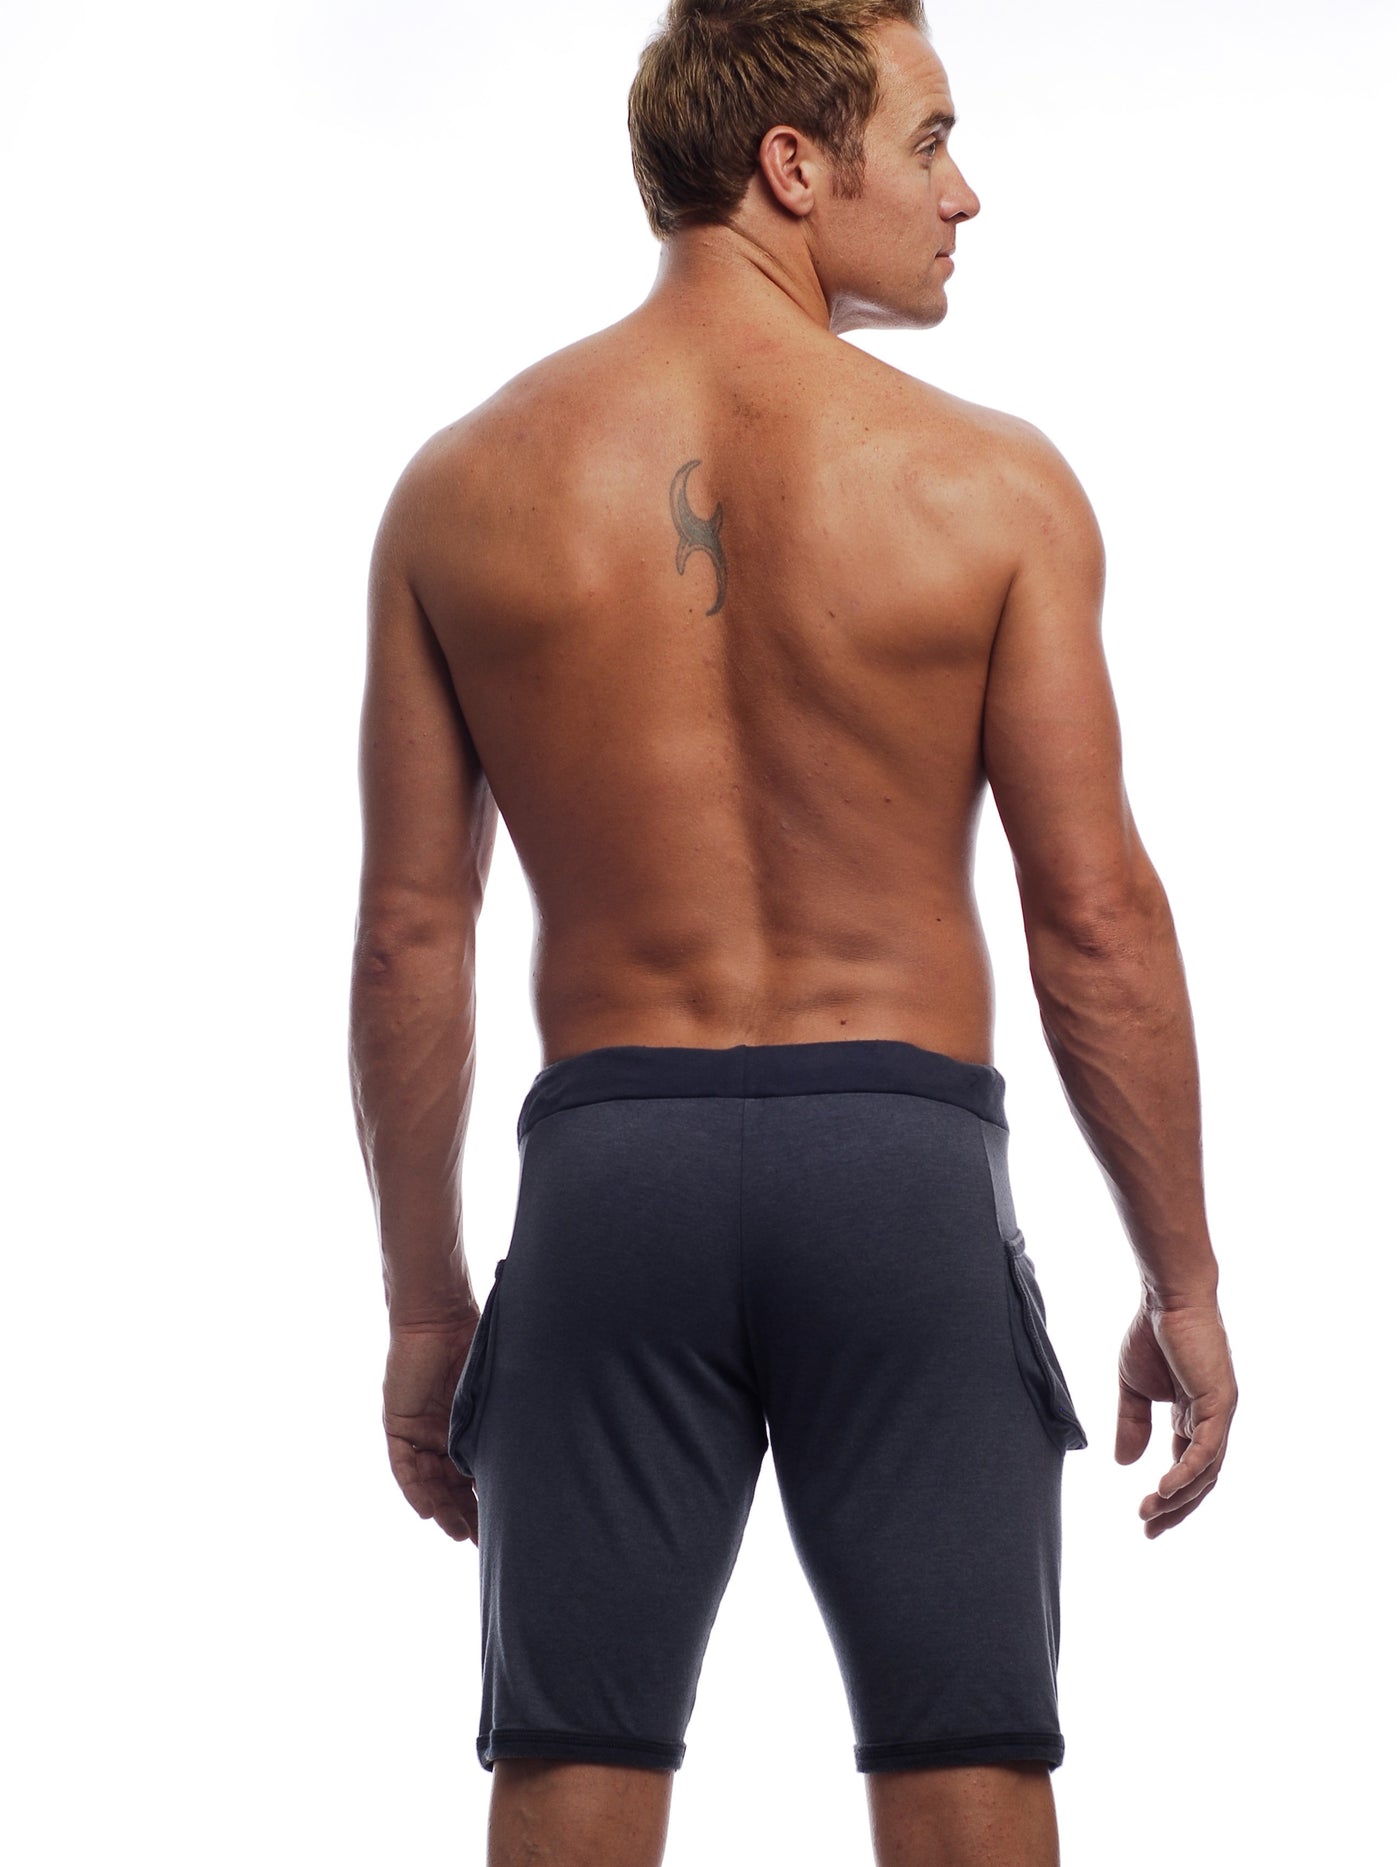 GO SOFTWEAR Vintage Wash Yoga Shorts For Men Charcoal Grey - Activemen Clothing